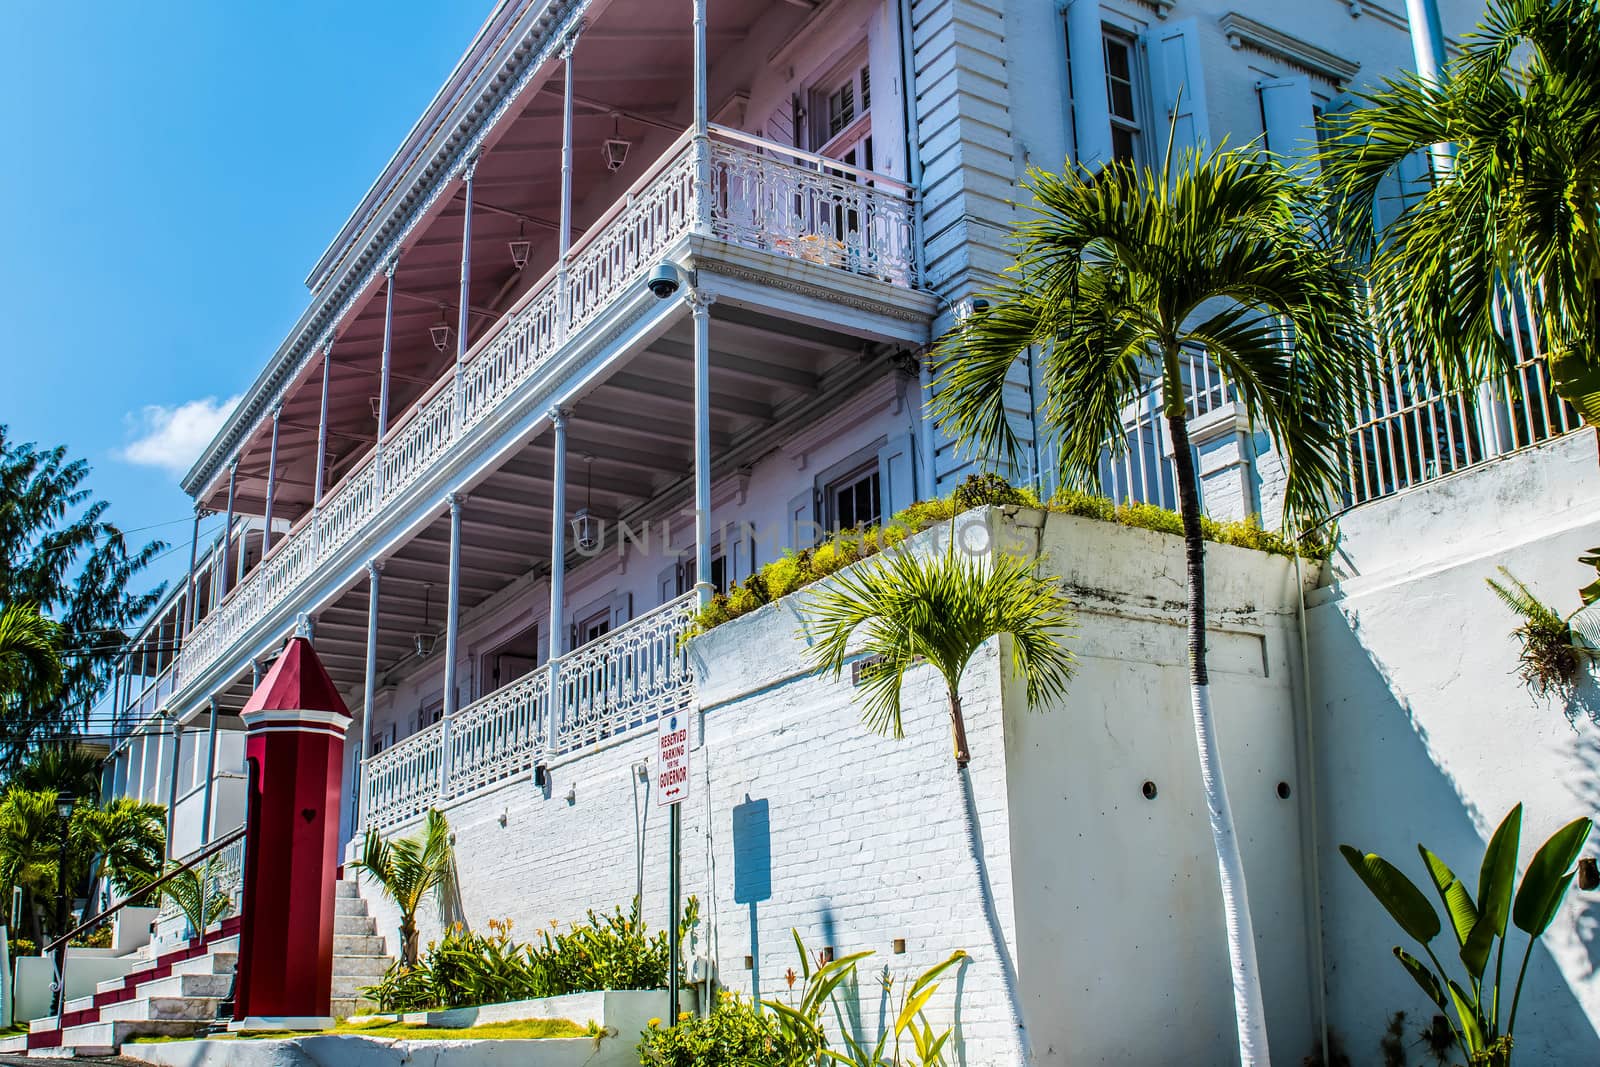 Lt Govenrner's mansion in old town, Charlotte Amalie, St. Thomas, USVI